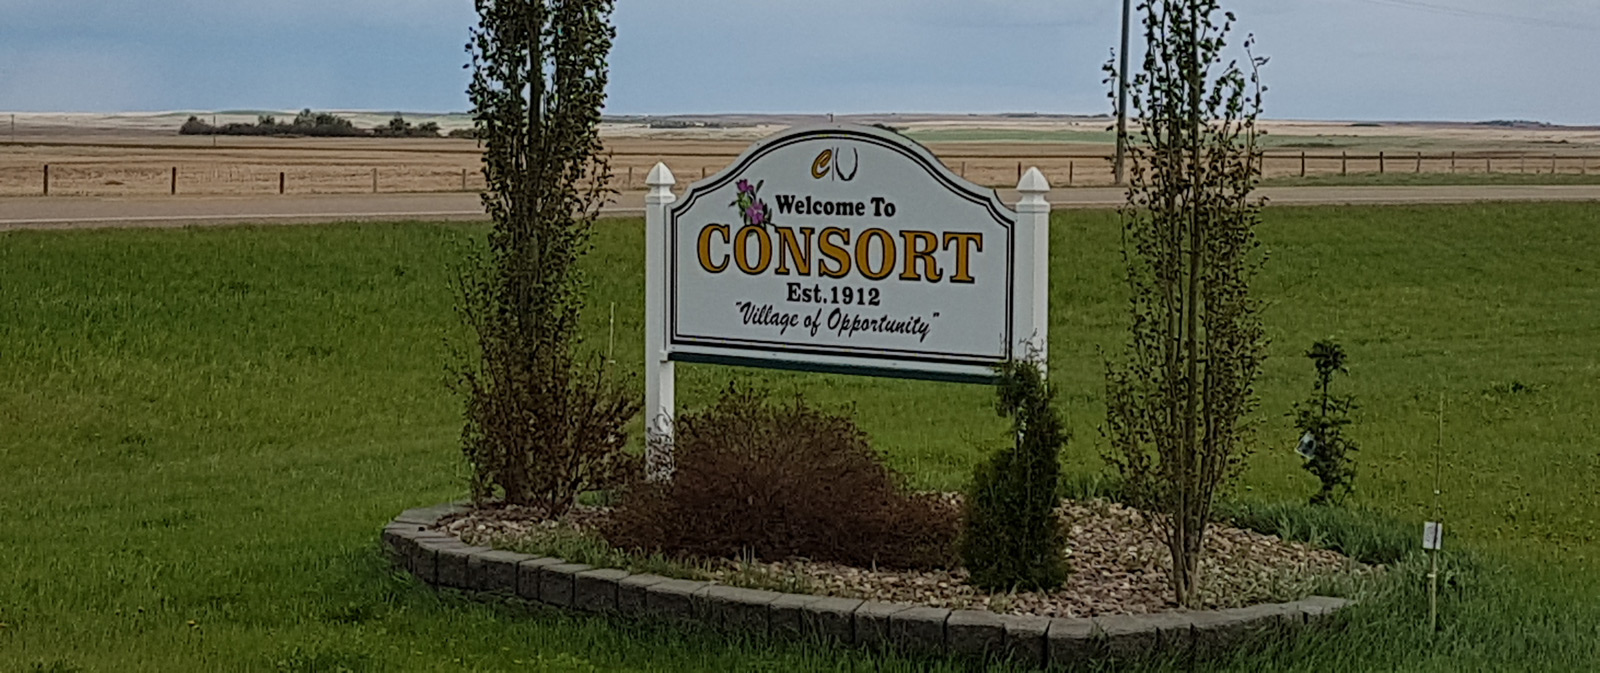 Village of Consort